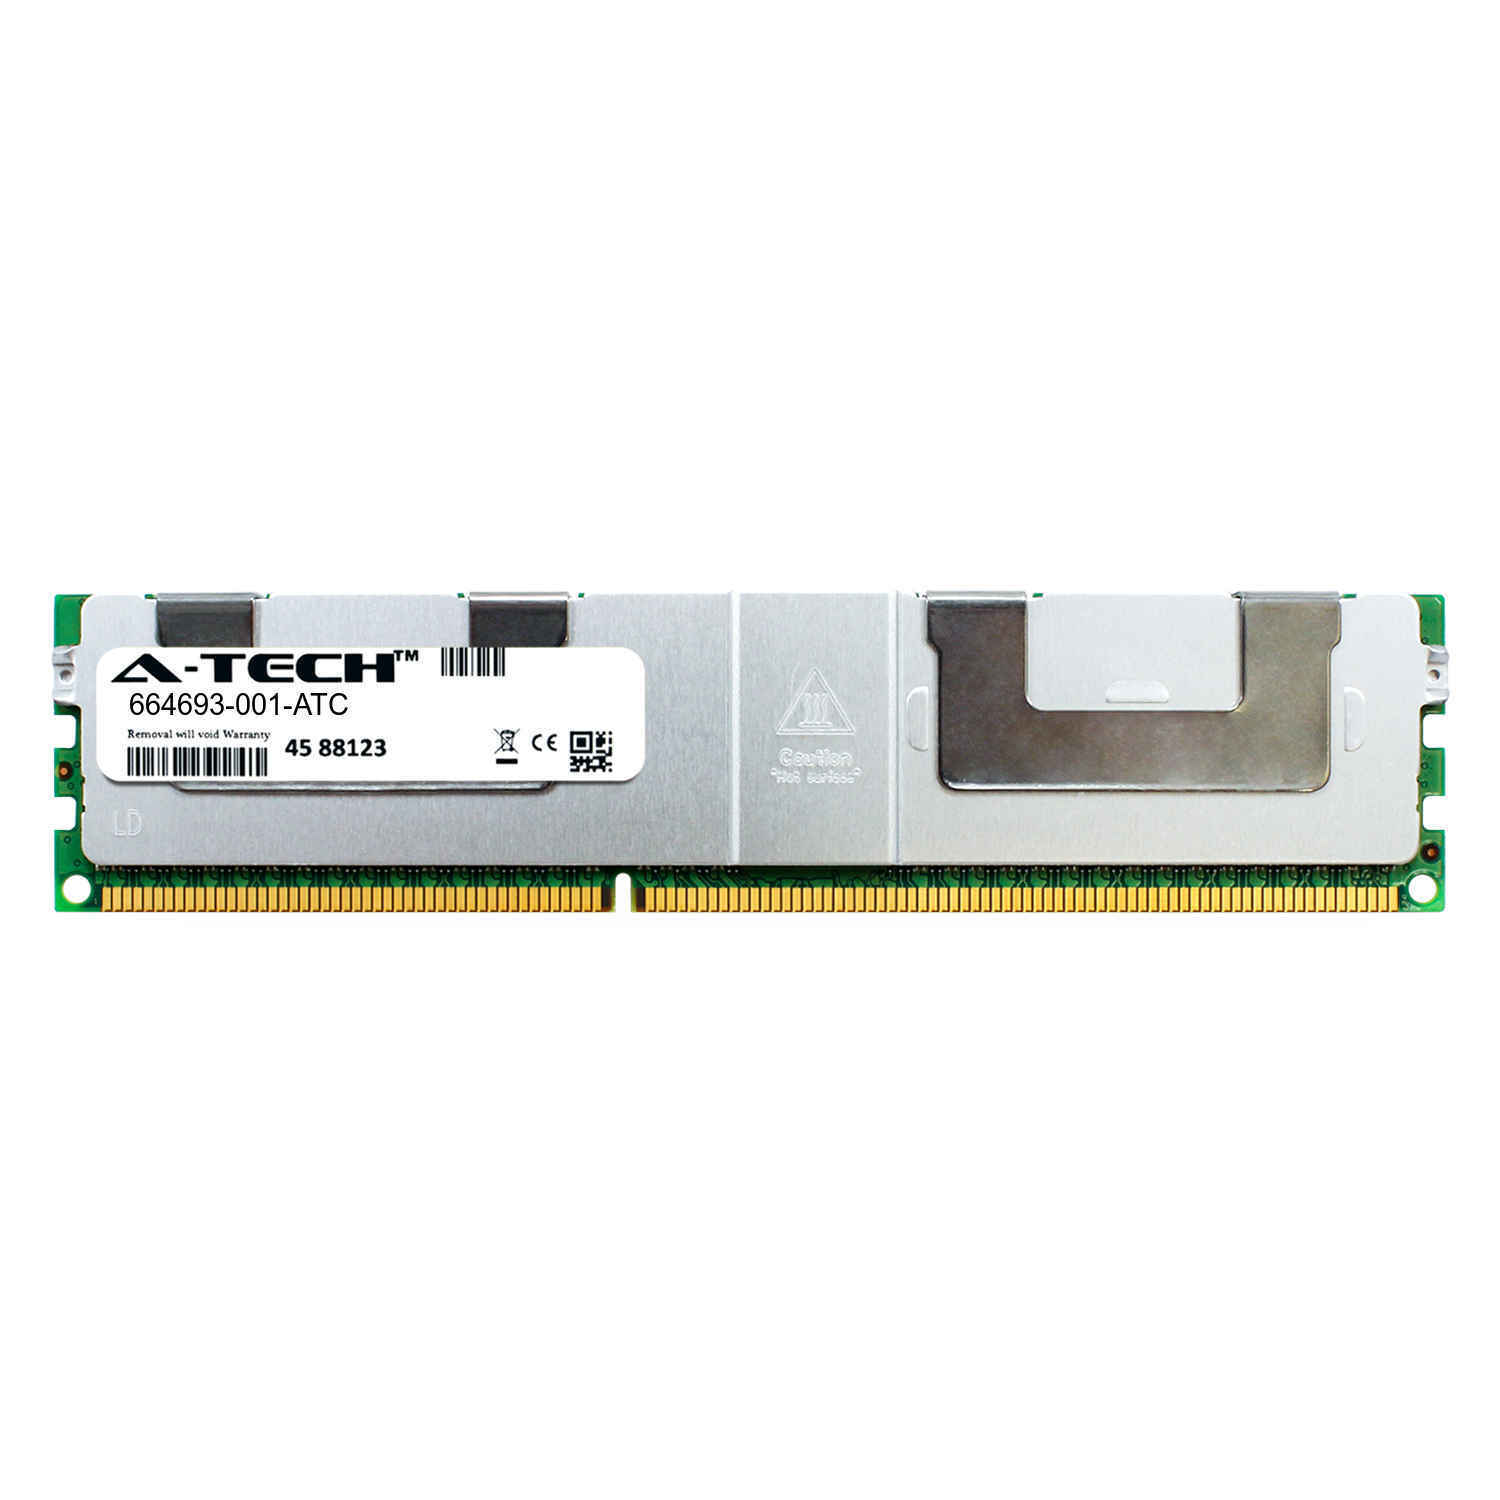 32GB DDR3 PC3-10600L 1333MHz LRDIMM (HP 664693-001 Equivalent) Server Memory RAM